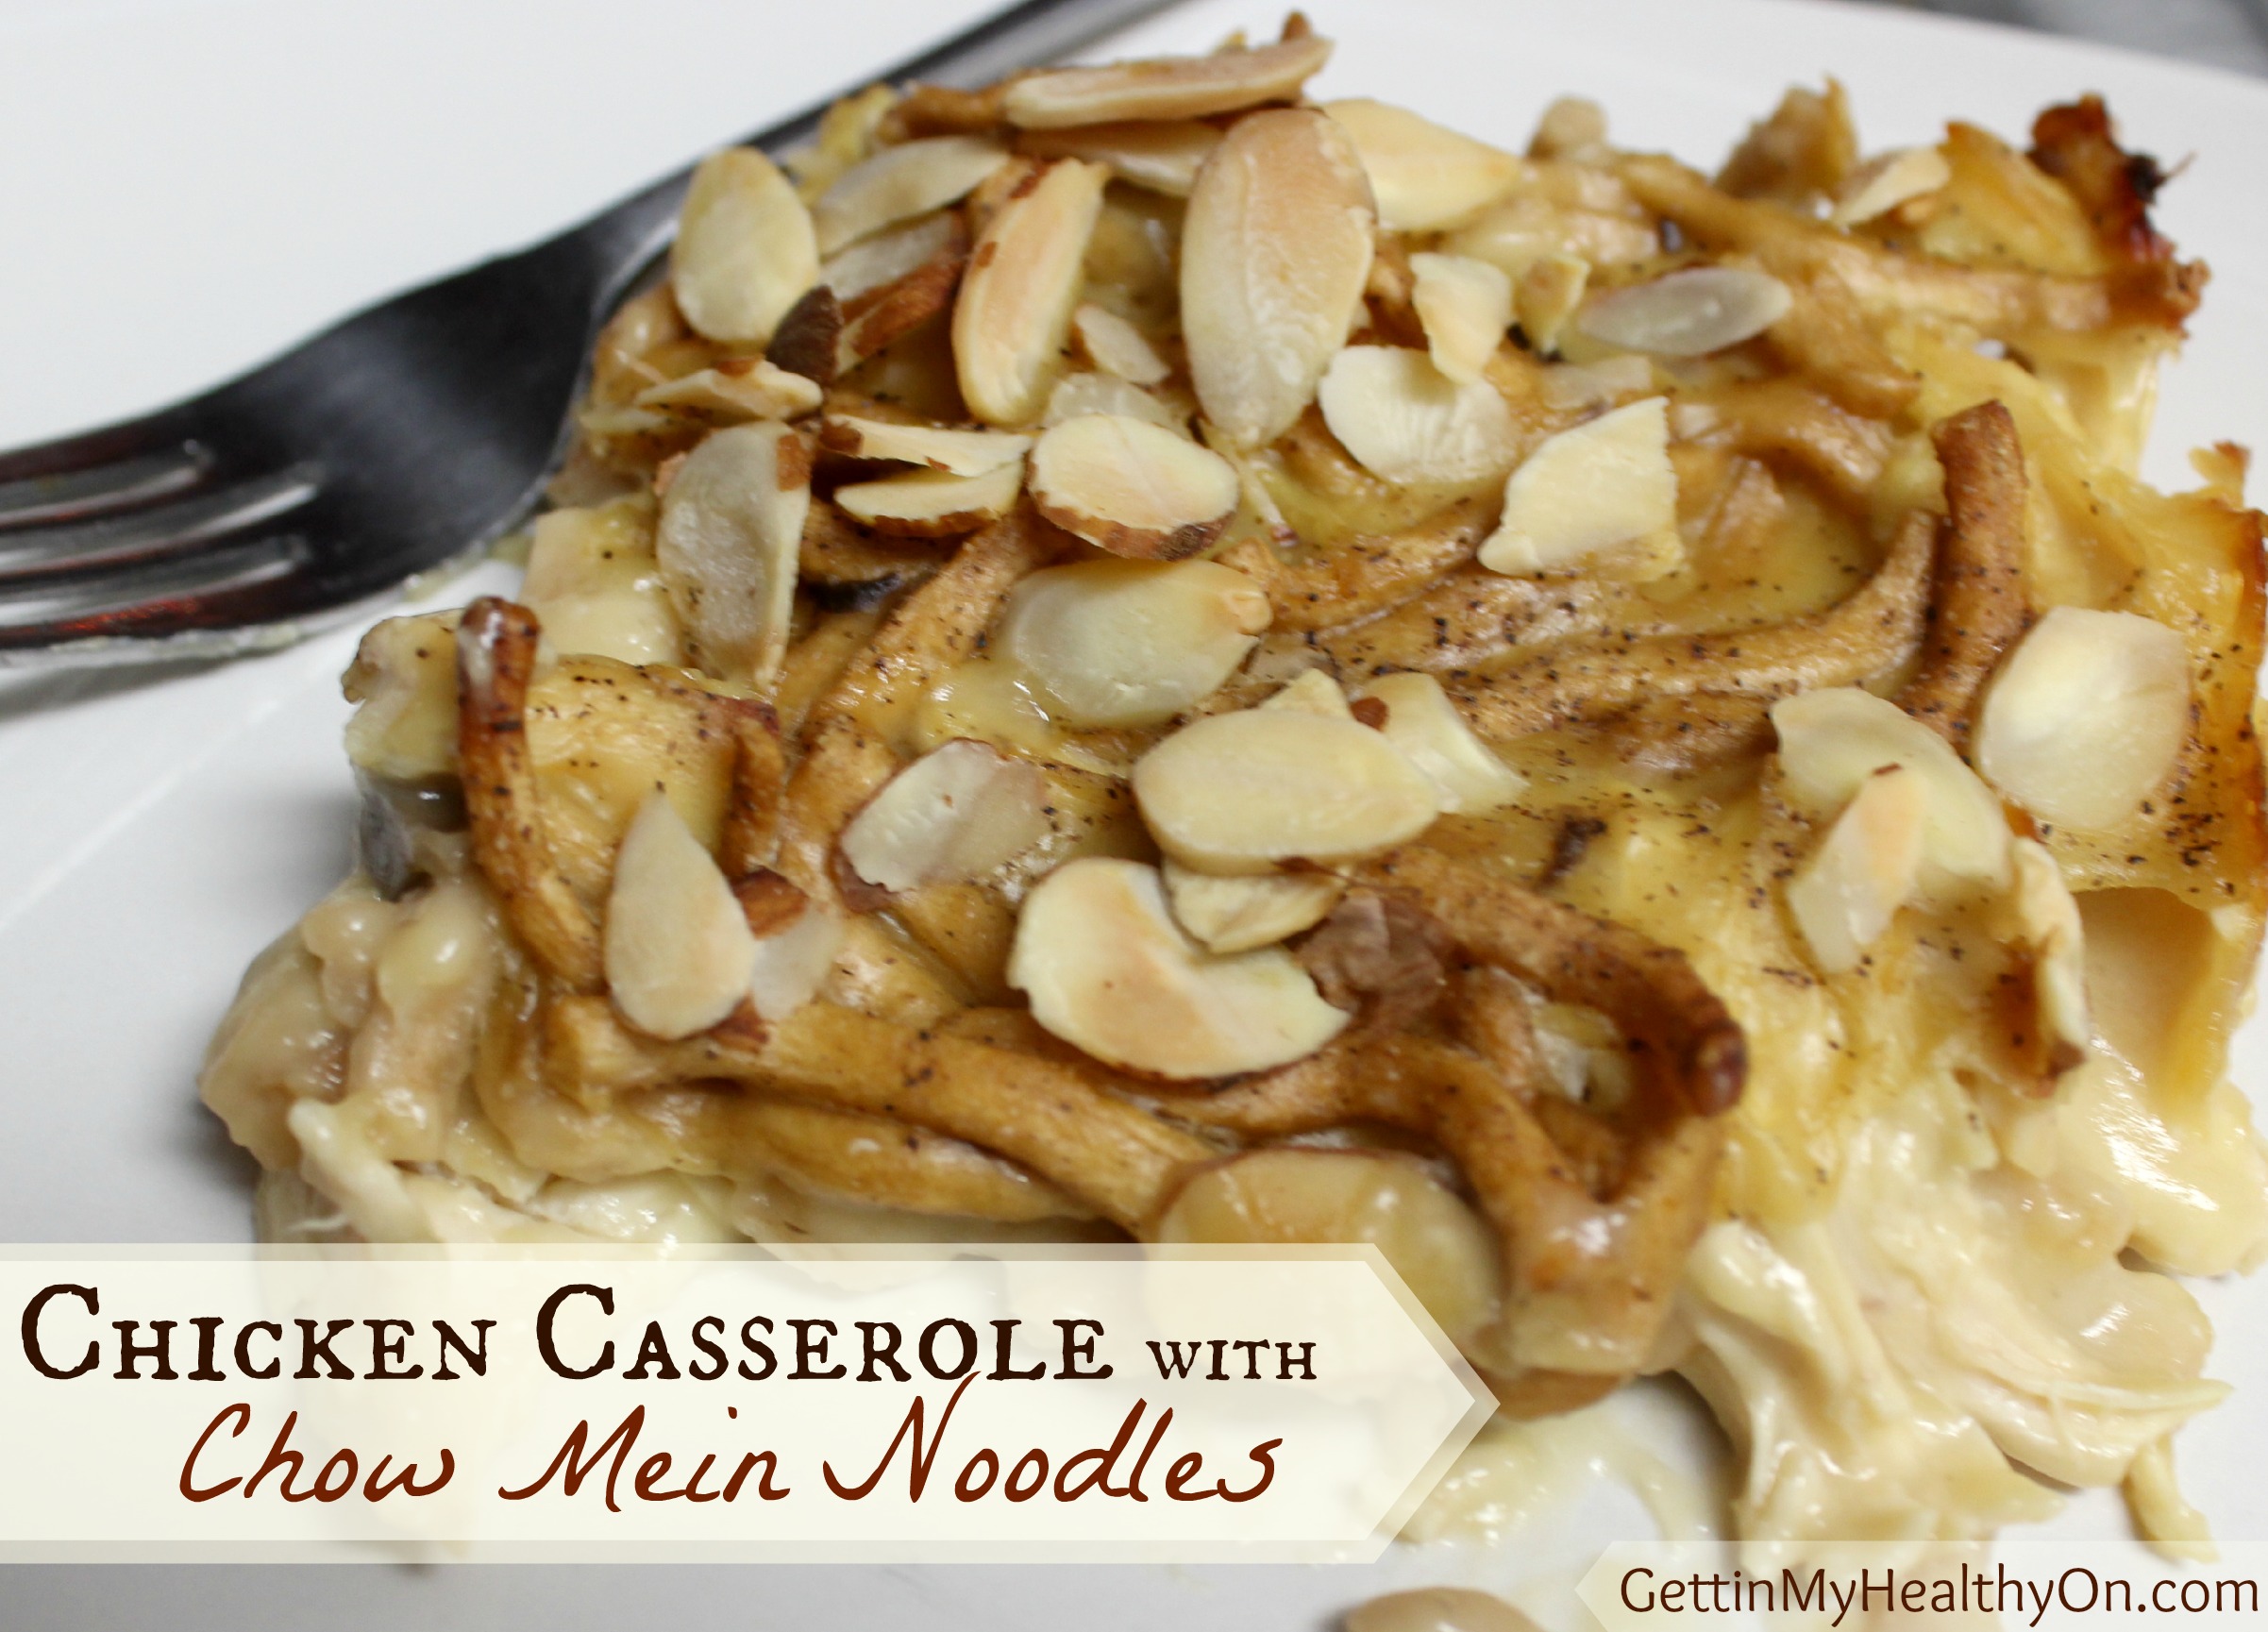 Chicken Casserole with Chow Mein Noodles